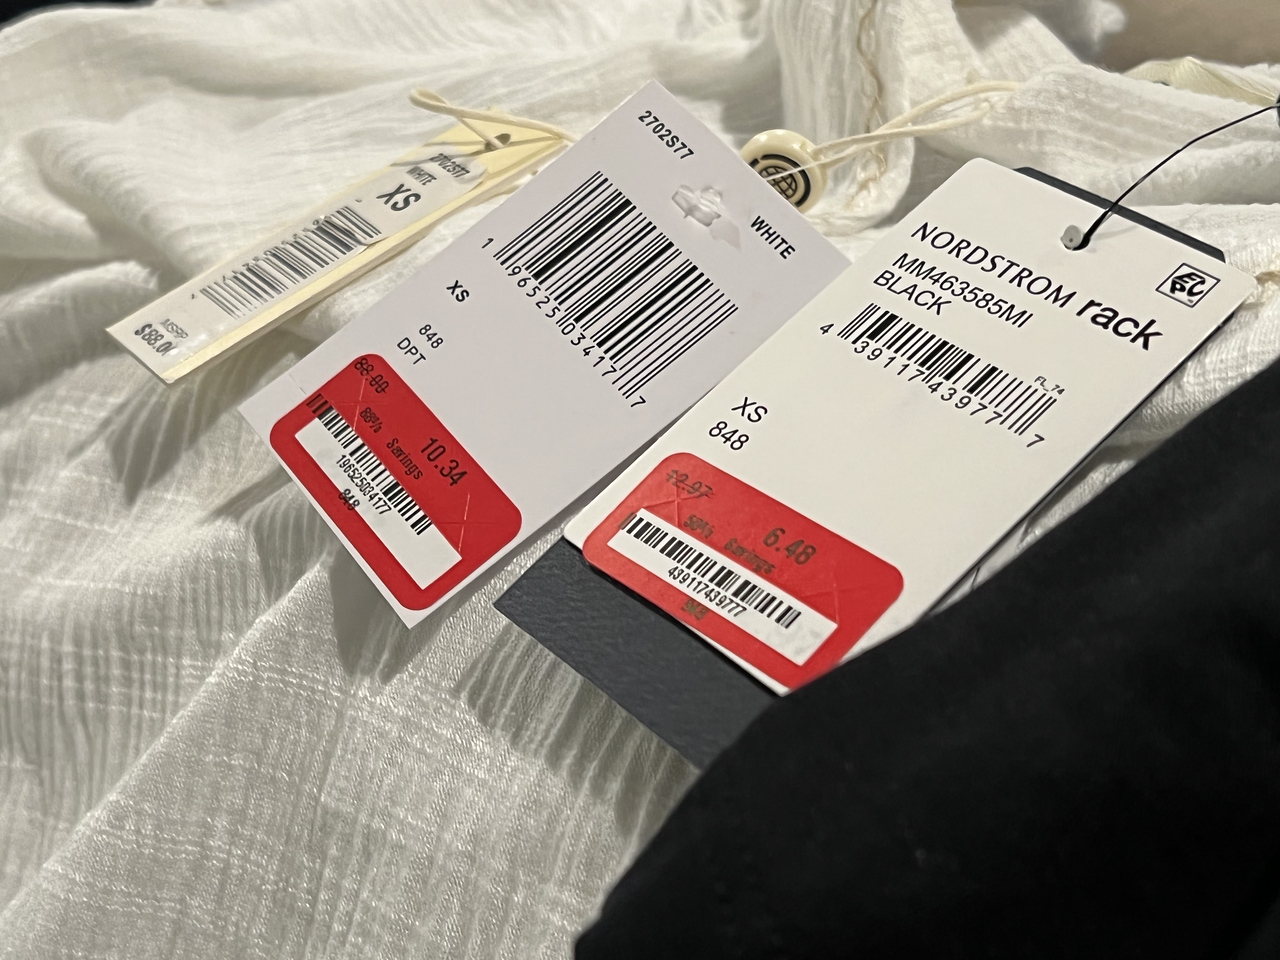 Nordstrom Rack 40% Off Clearance Deals: Get $250 Jeans for $19 & More